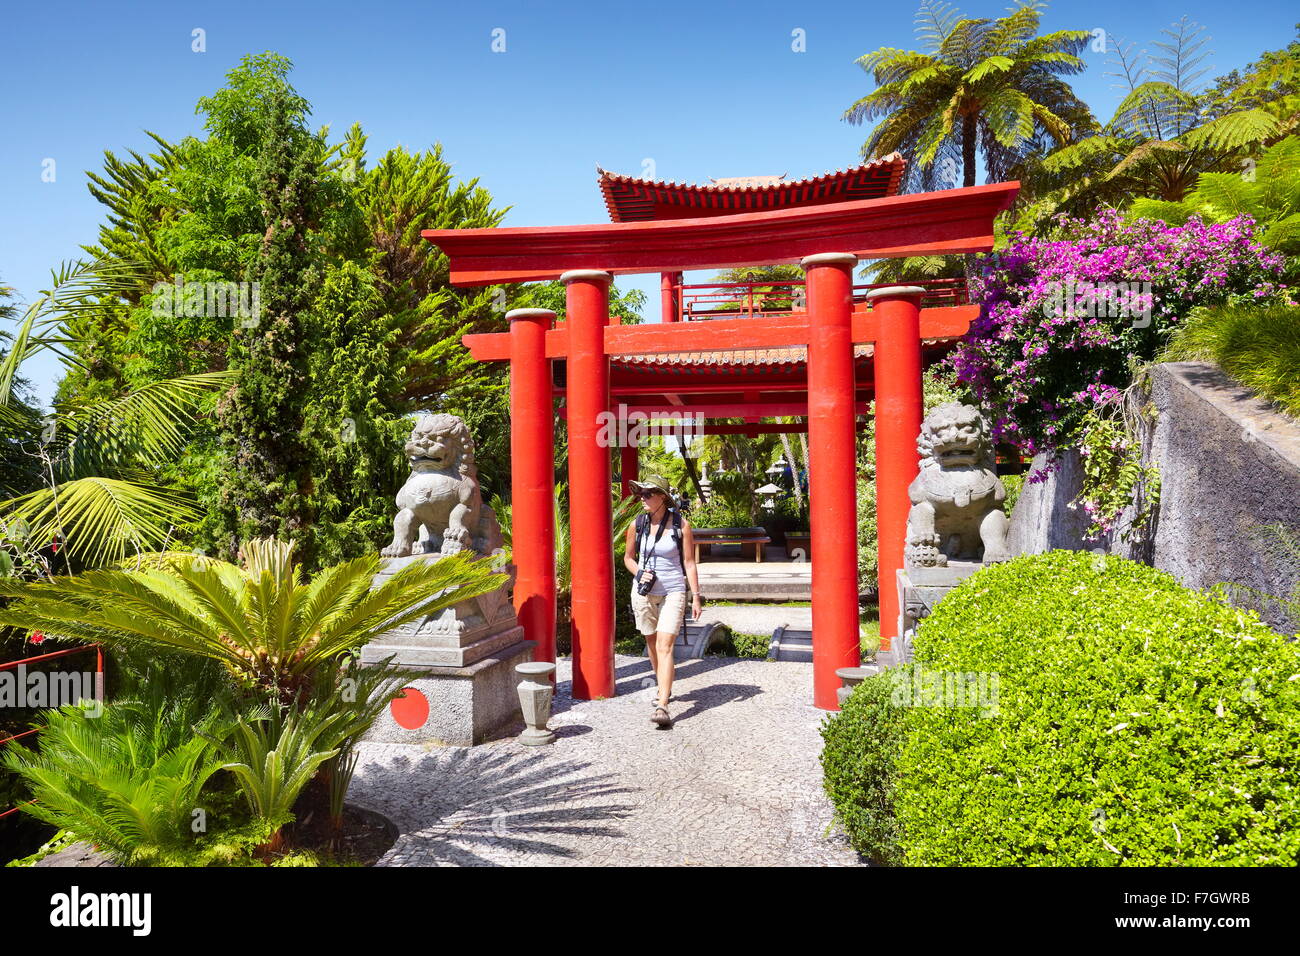 Monte Palace Tropical Garden (giardino Giapponese) - Monte, l'isola di Madeira, Portogallo Foto Stock